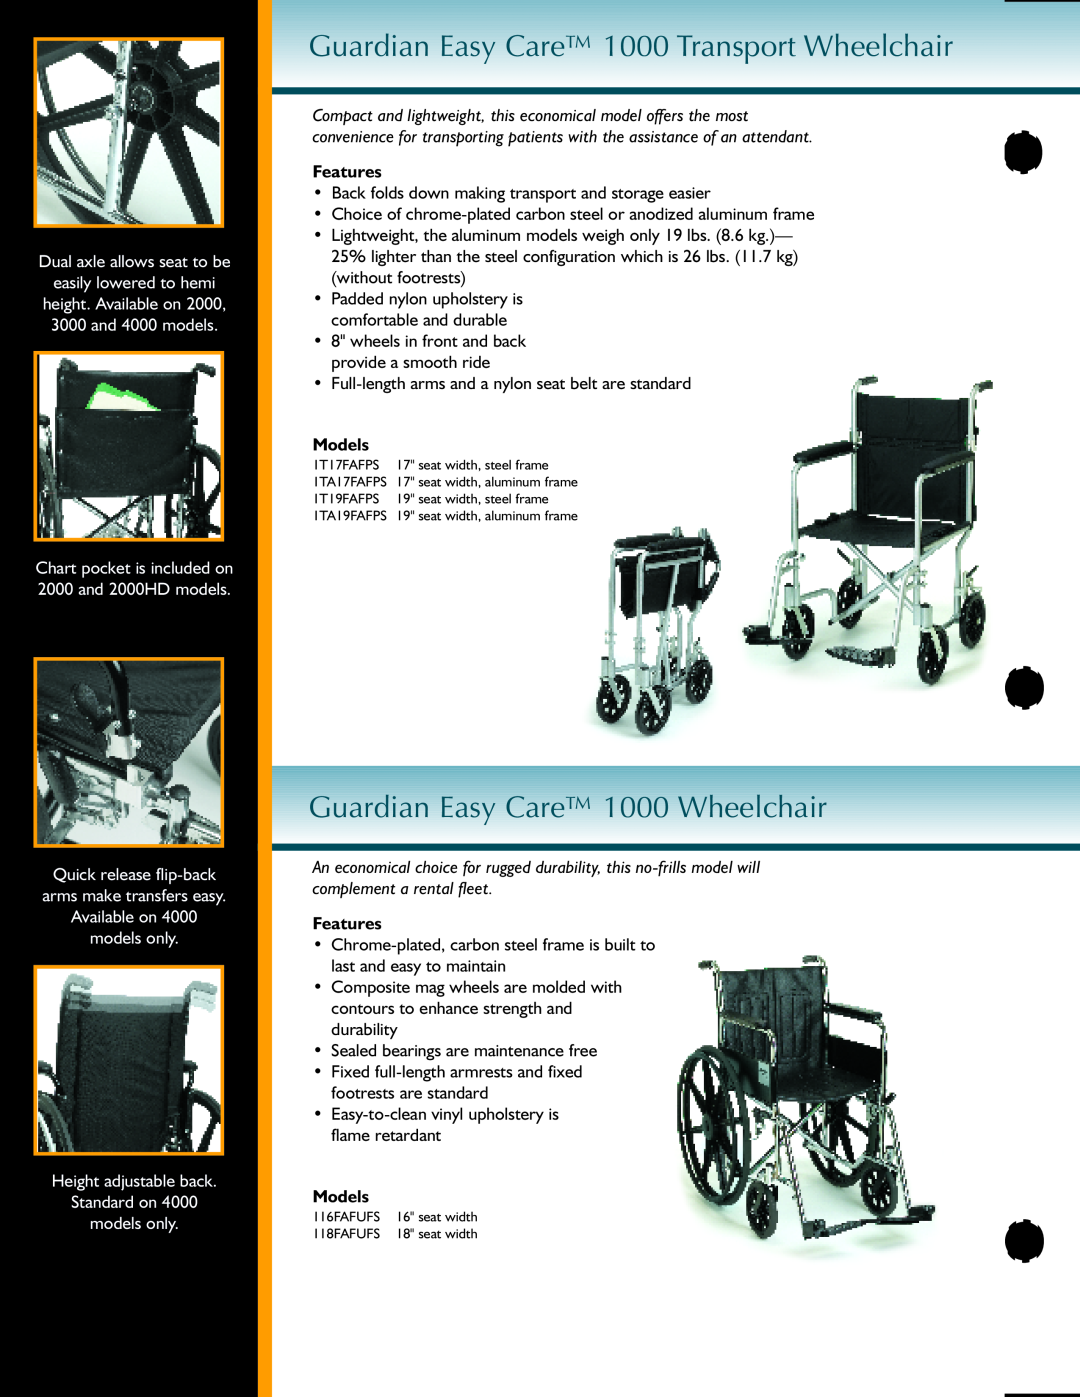 Sunrise Medical Wheelerchair Guardian Easy Care 1000 Transport Wheelchair, Guardian Easy Care 1000 Wheelchair, Features 